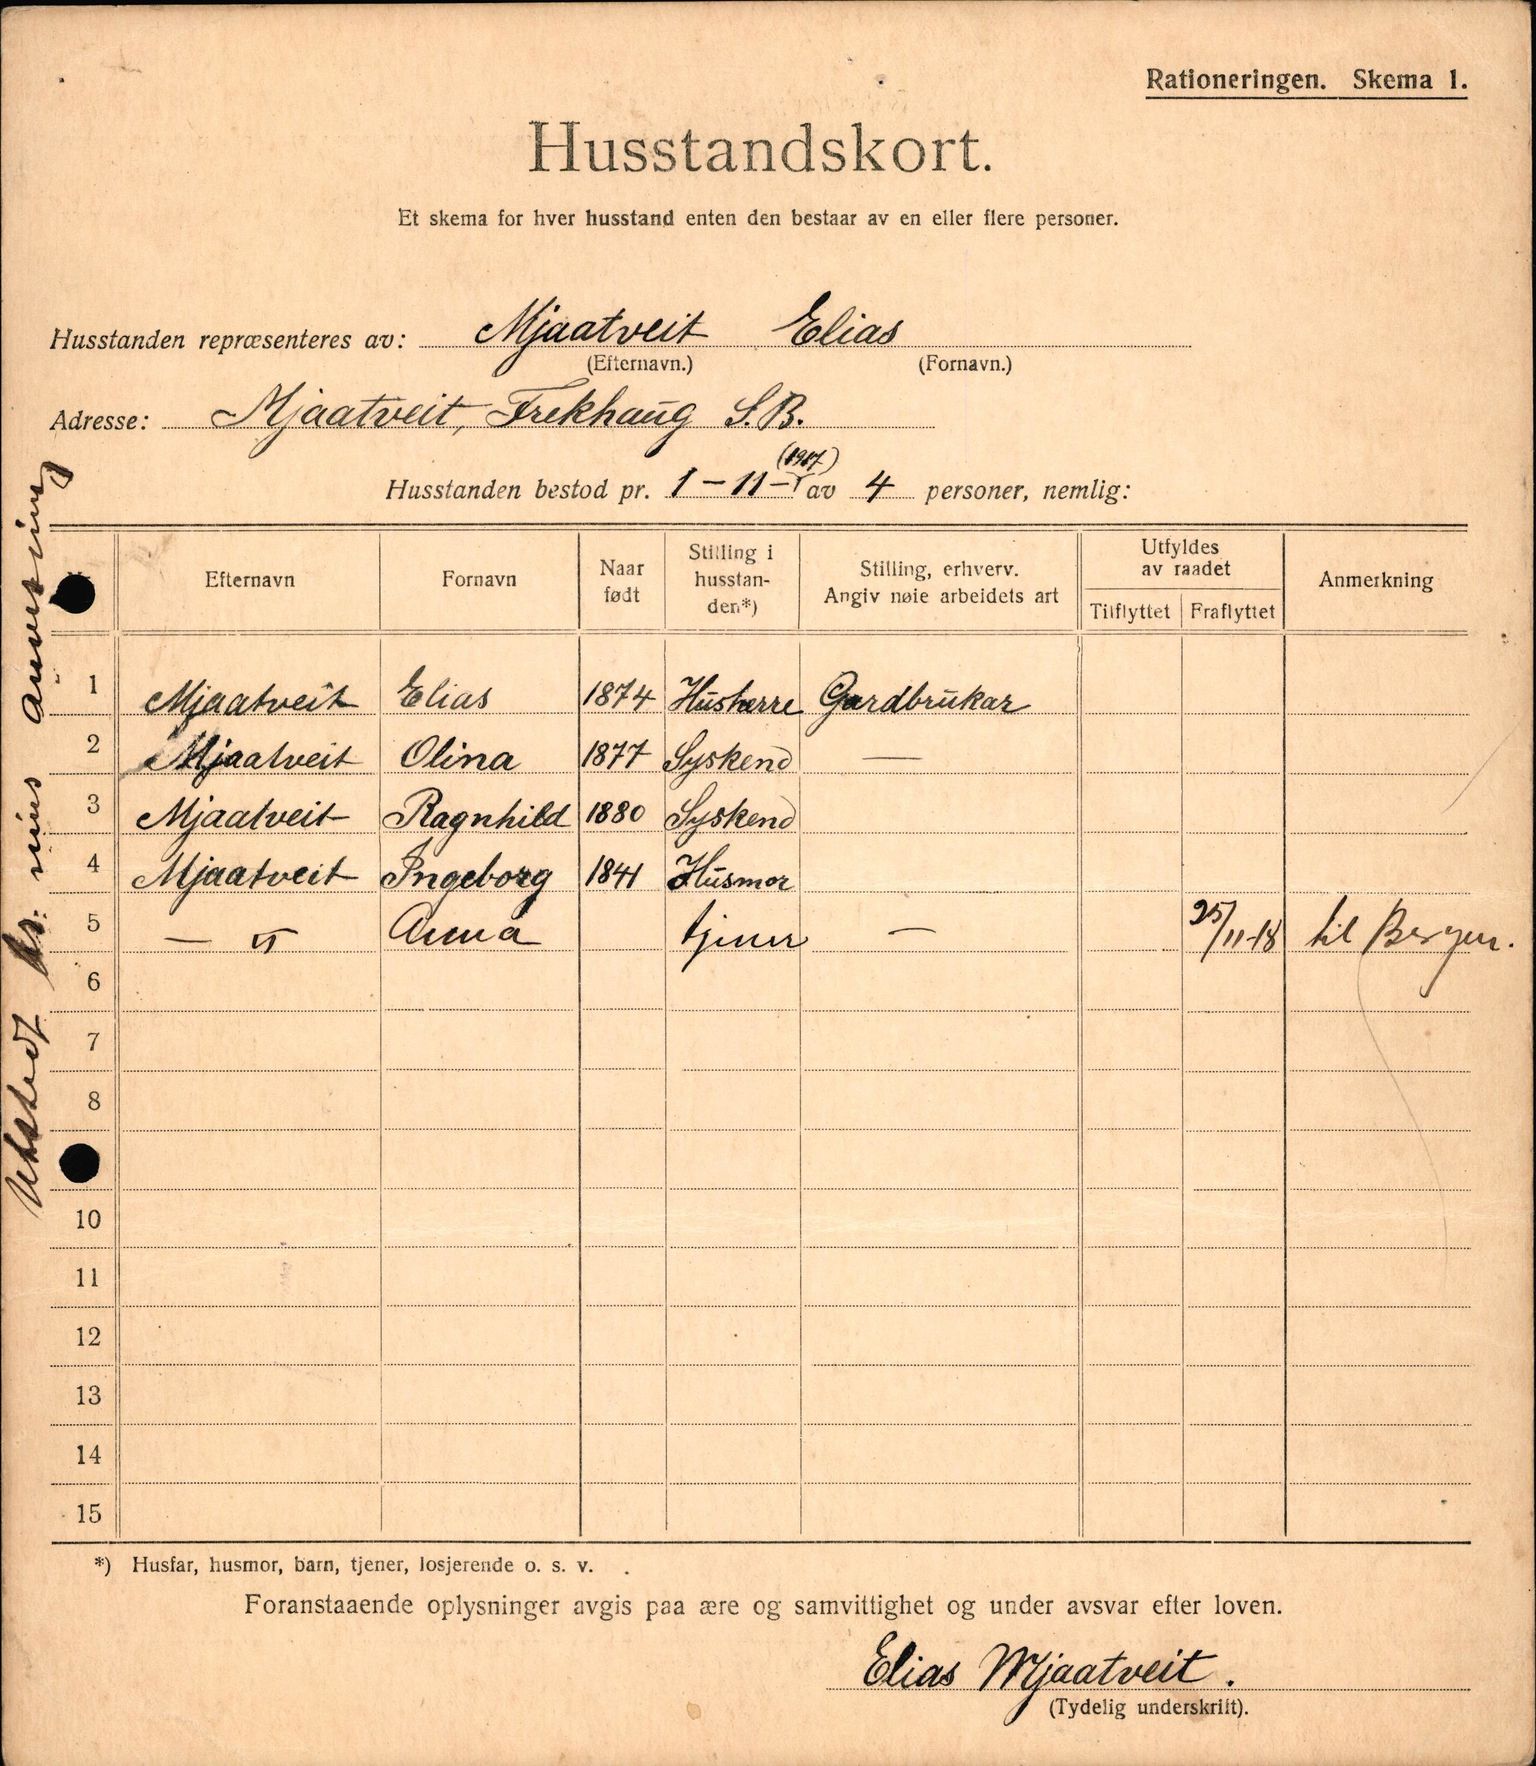 IKAH, Meland kommune, Provianteringsrådet, Husstander per 01.11.1917, 1917-1918, p. 243